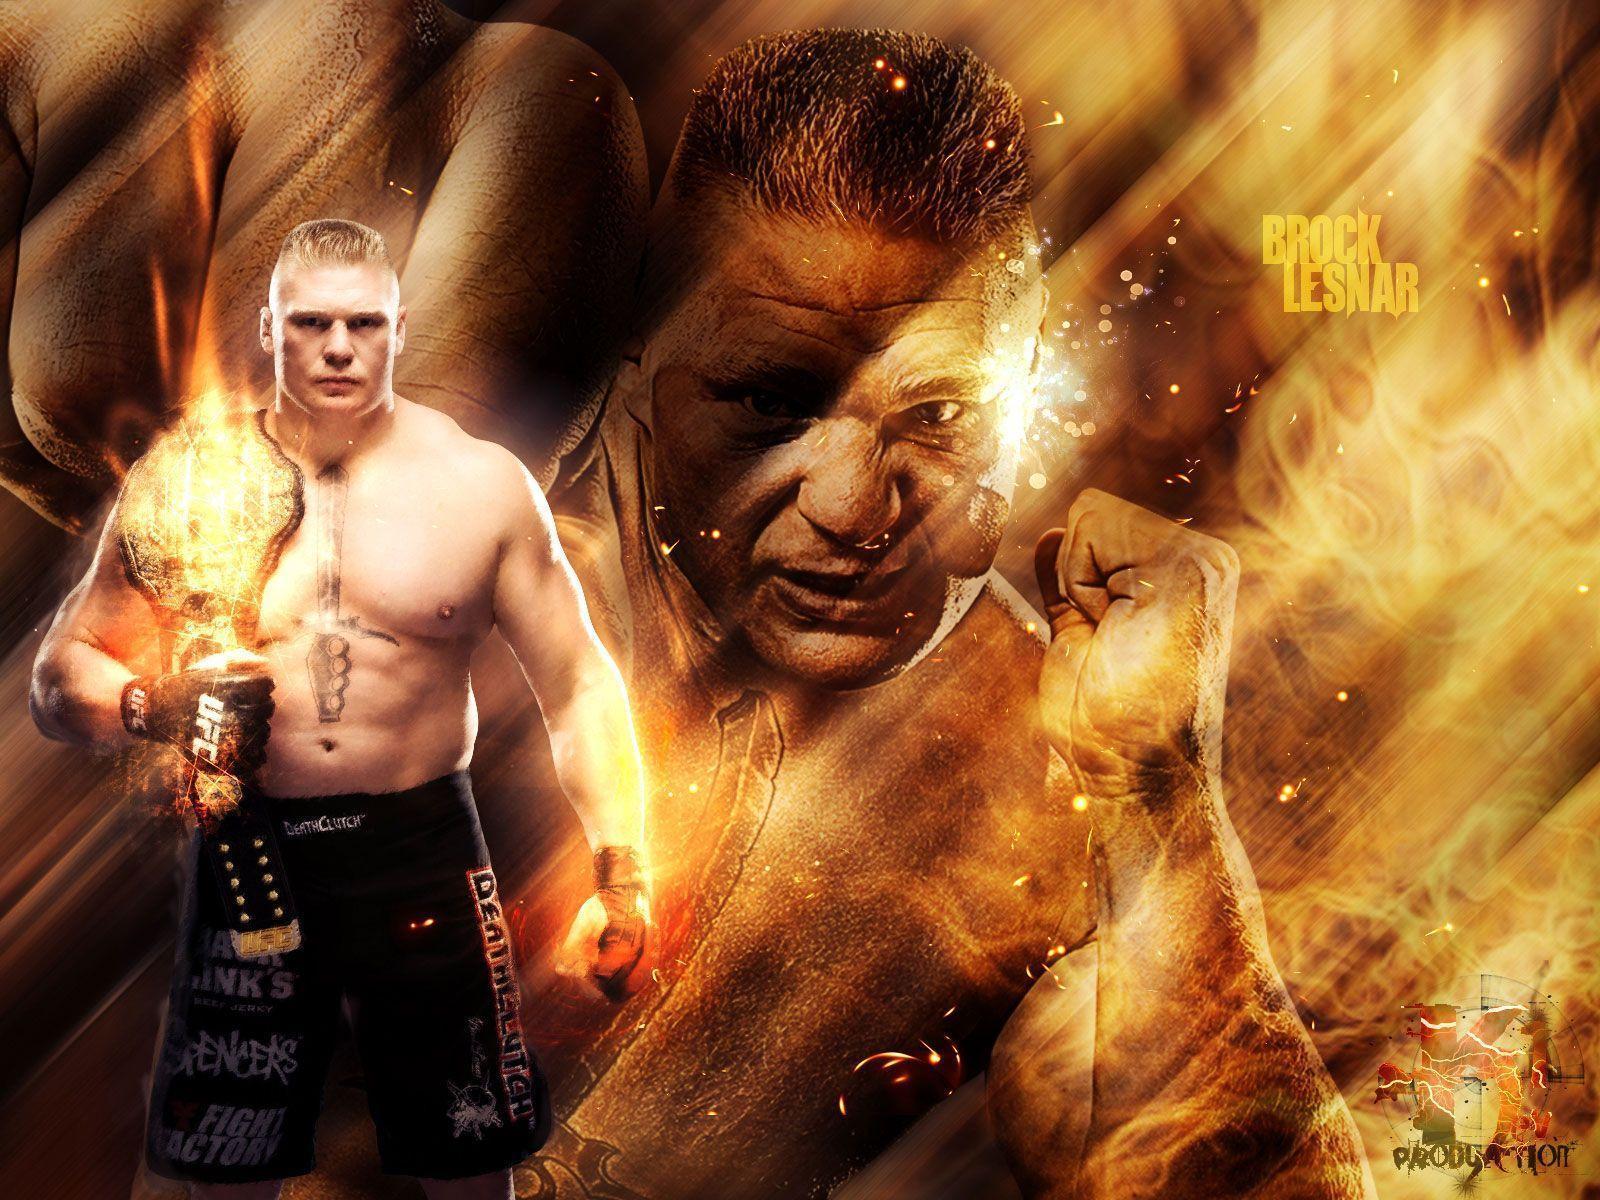 Brock Lesnar Wallpaper. Brock Lesnar Photo. Brock Lesnar Image